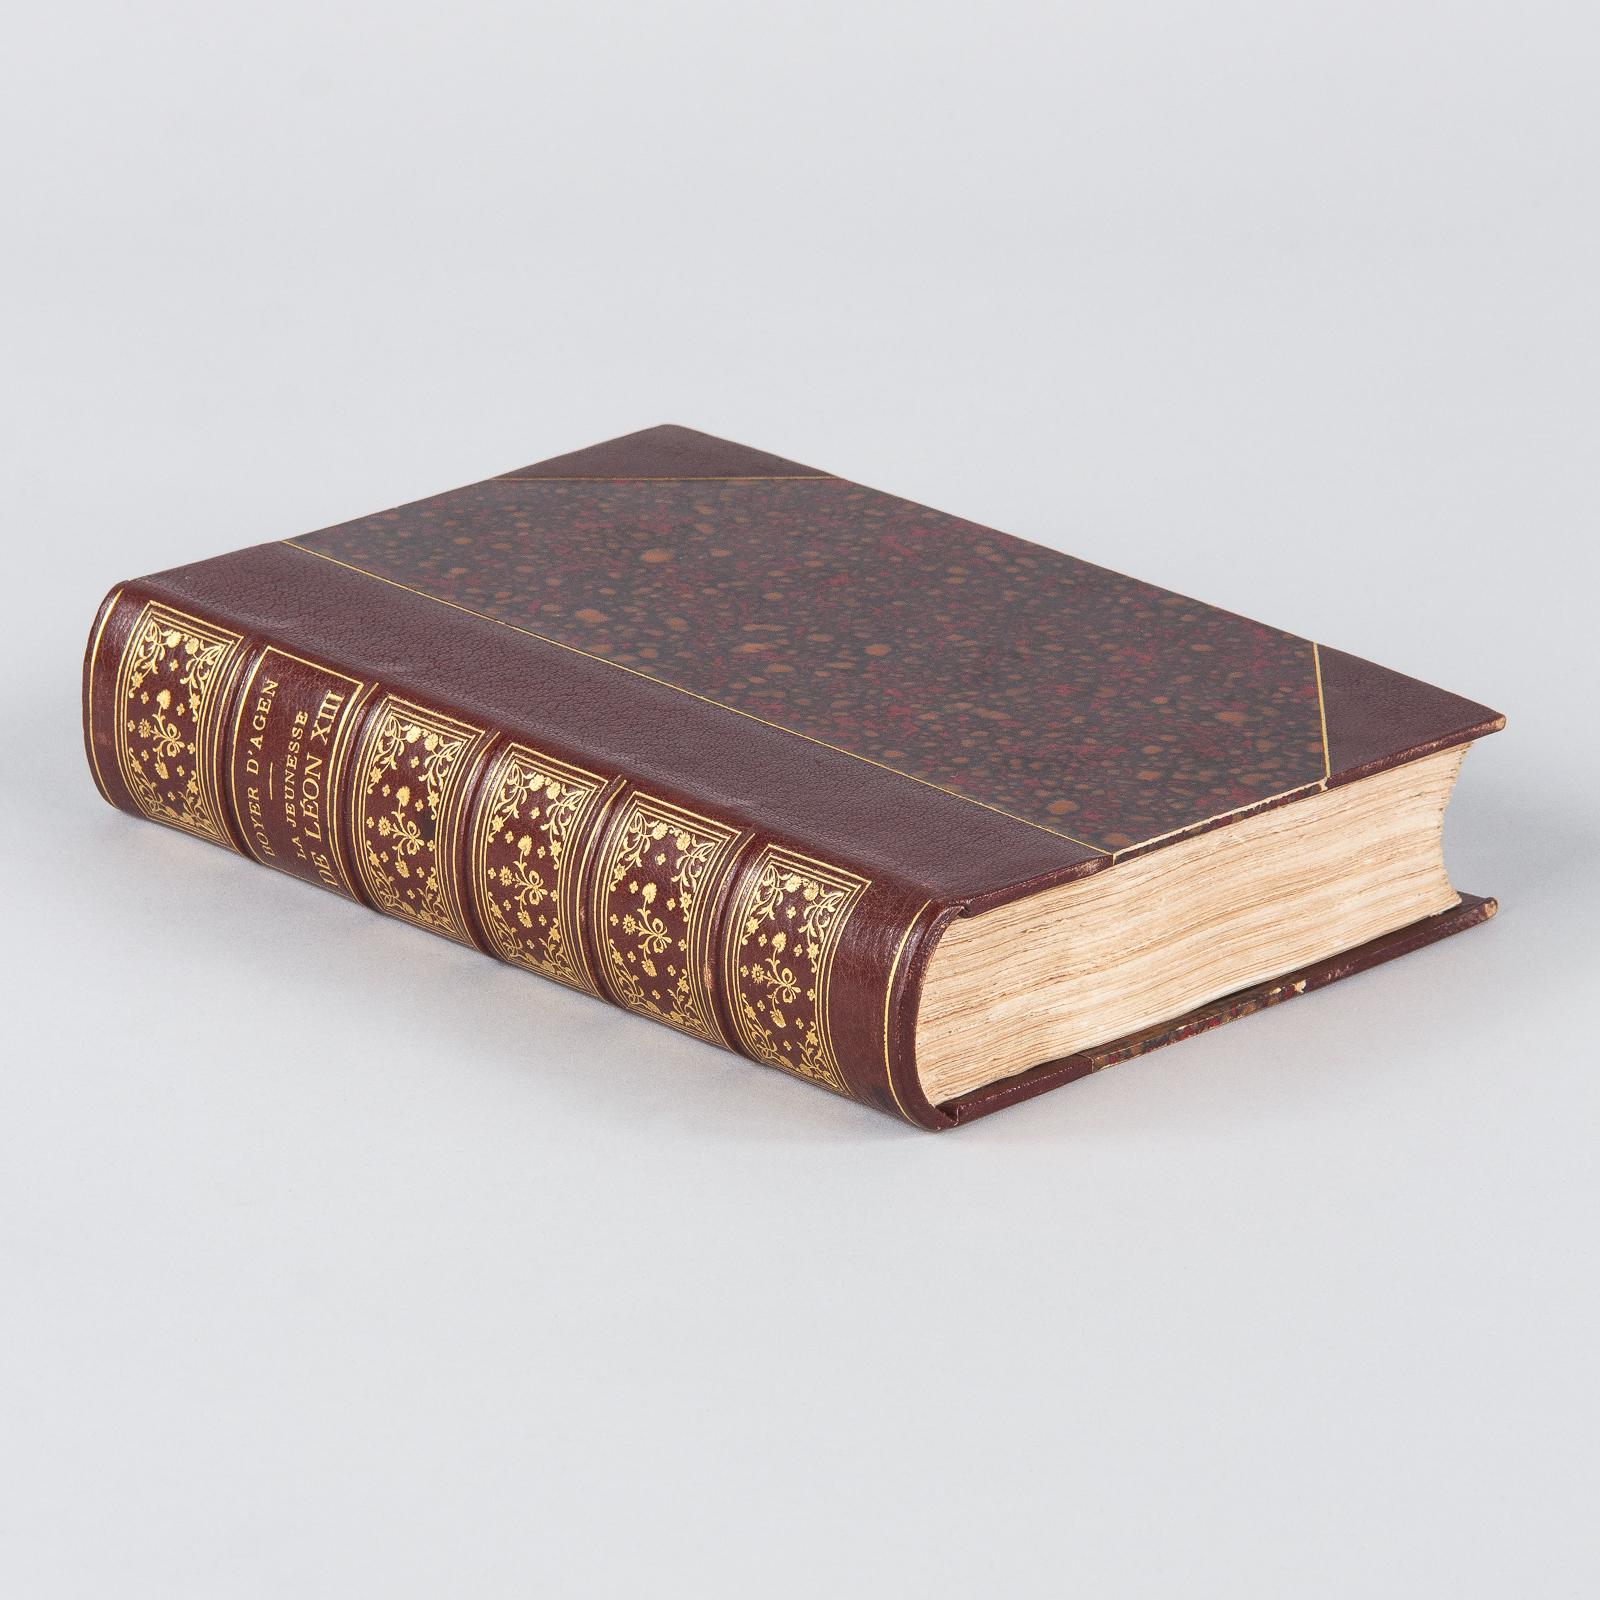 Leather French Book, La Jeunesse de Leon XIII by Boyer d'Agen, 1896